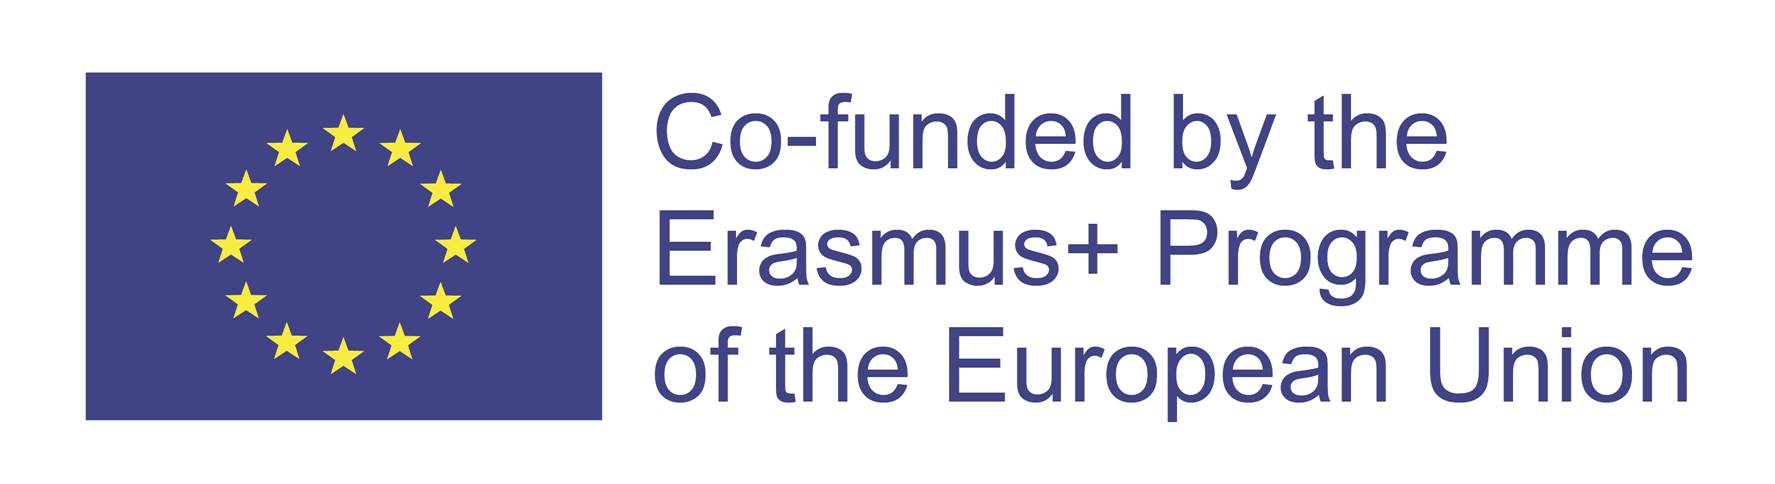 Erasmus + Co-funded